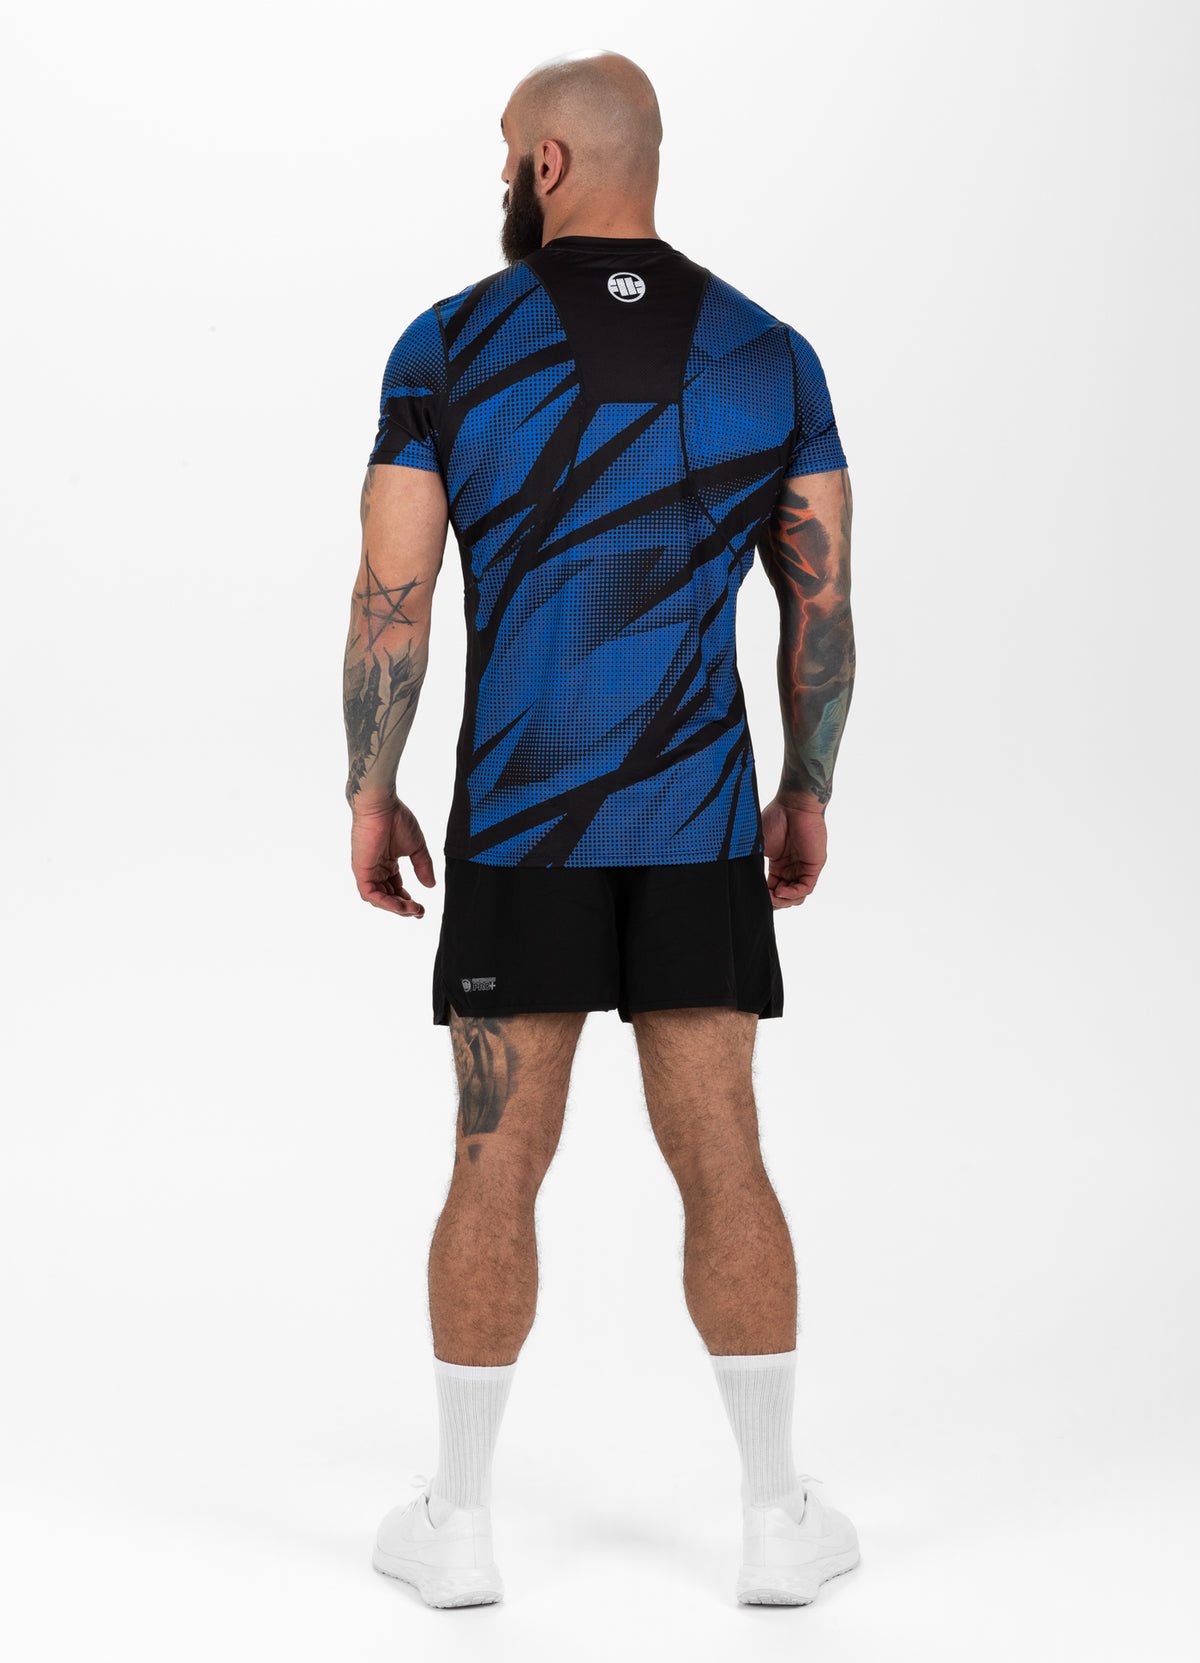 DOT CAMO 2 Blue Sports T-Shirt